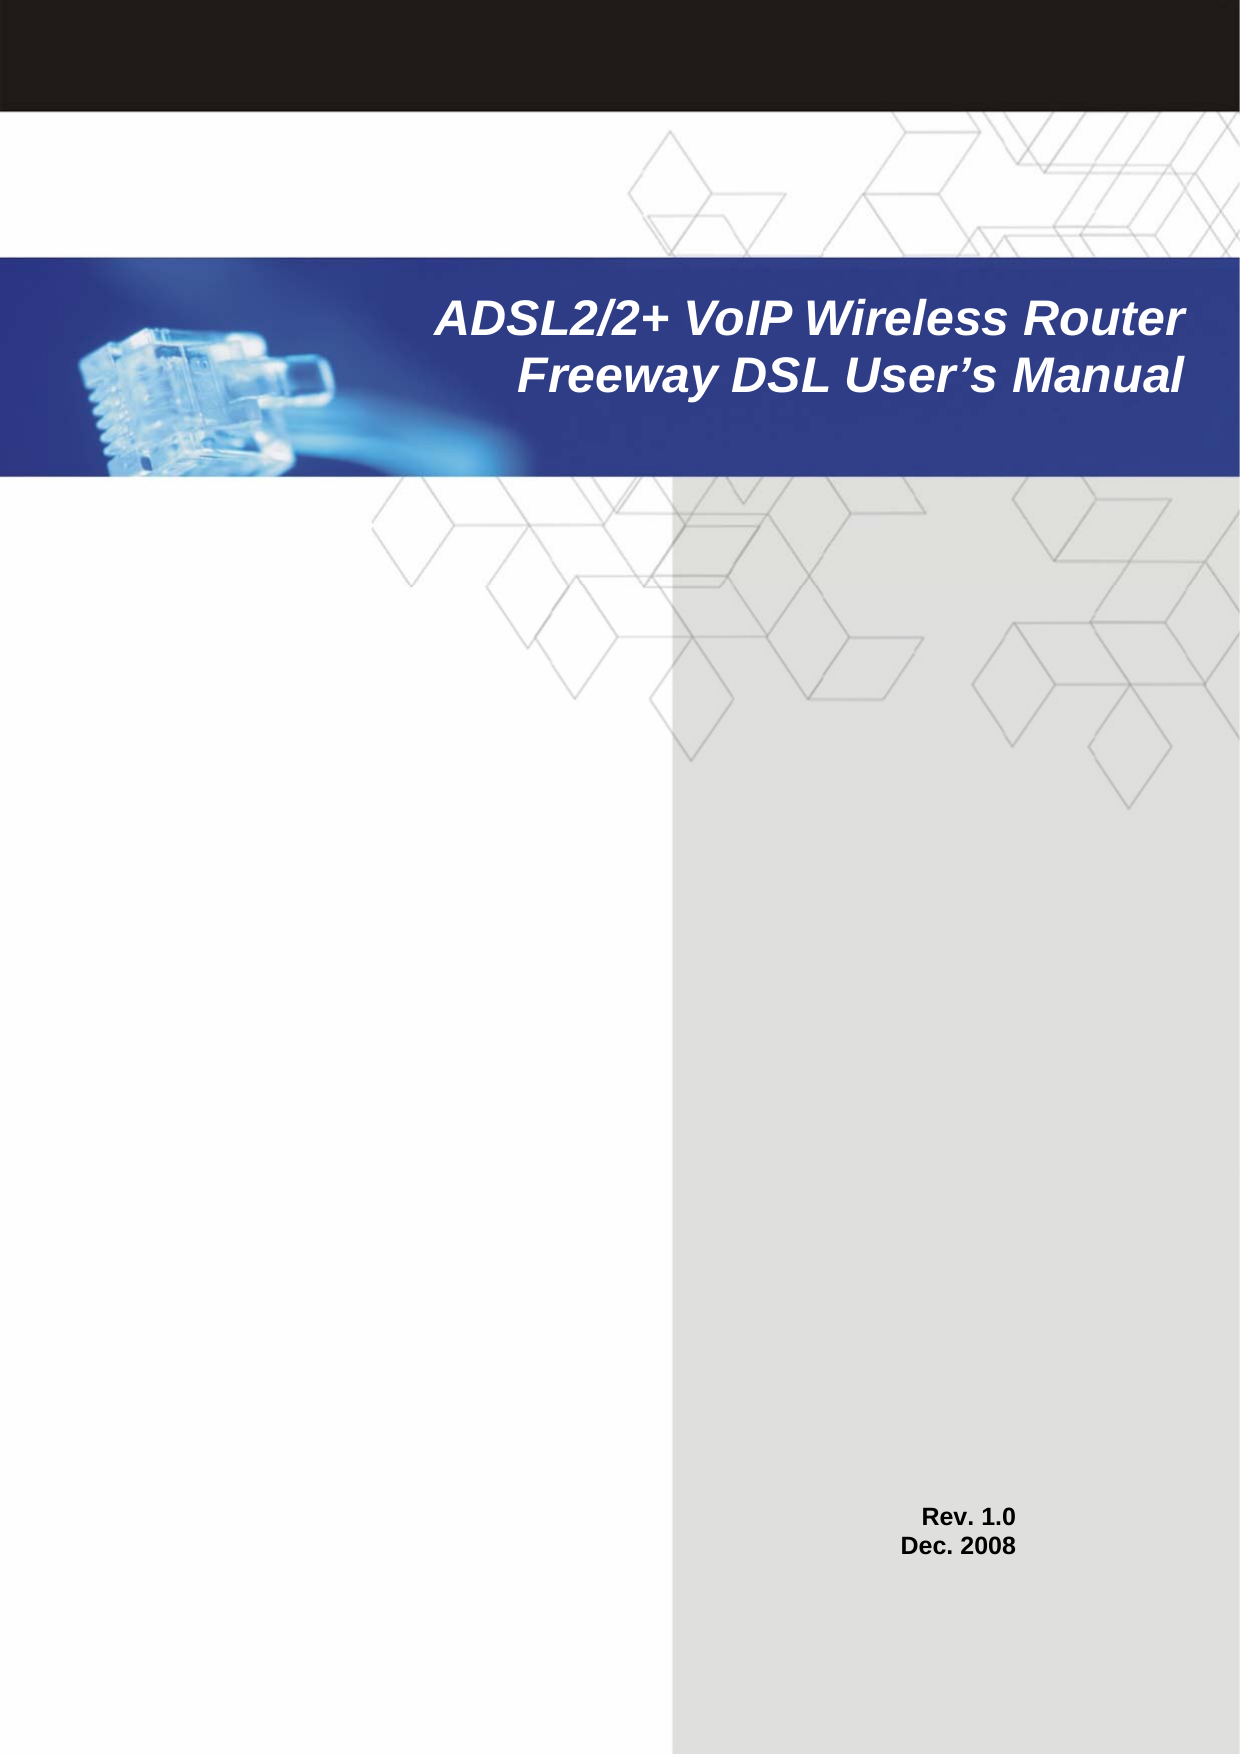 Freeway DSL User’s Manual  ADSL2/2+ VoIP Wireless RouterFreeway DSL User’s Manual  Rev. 1.0 Dec. 2008 